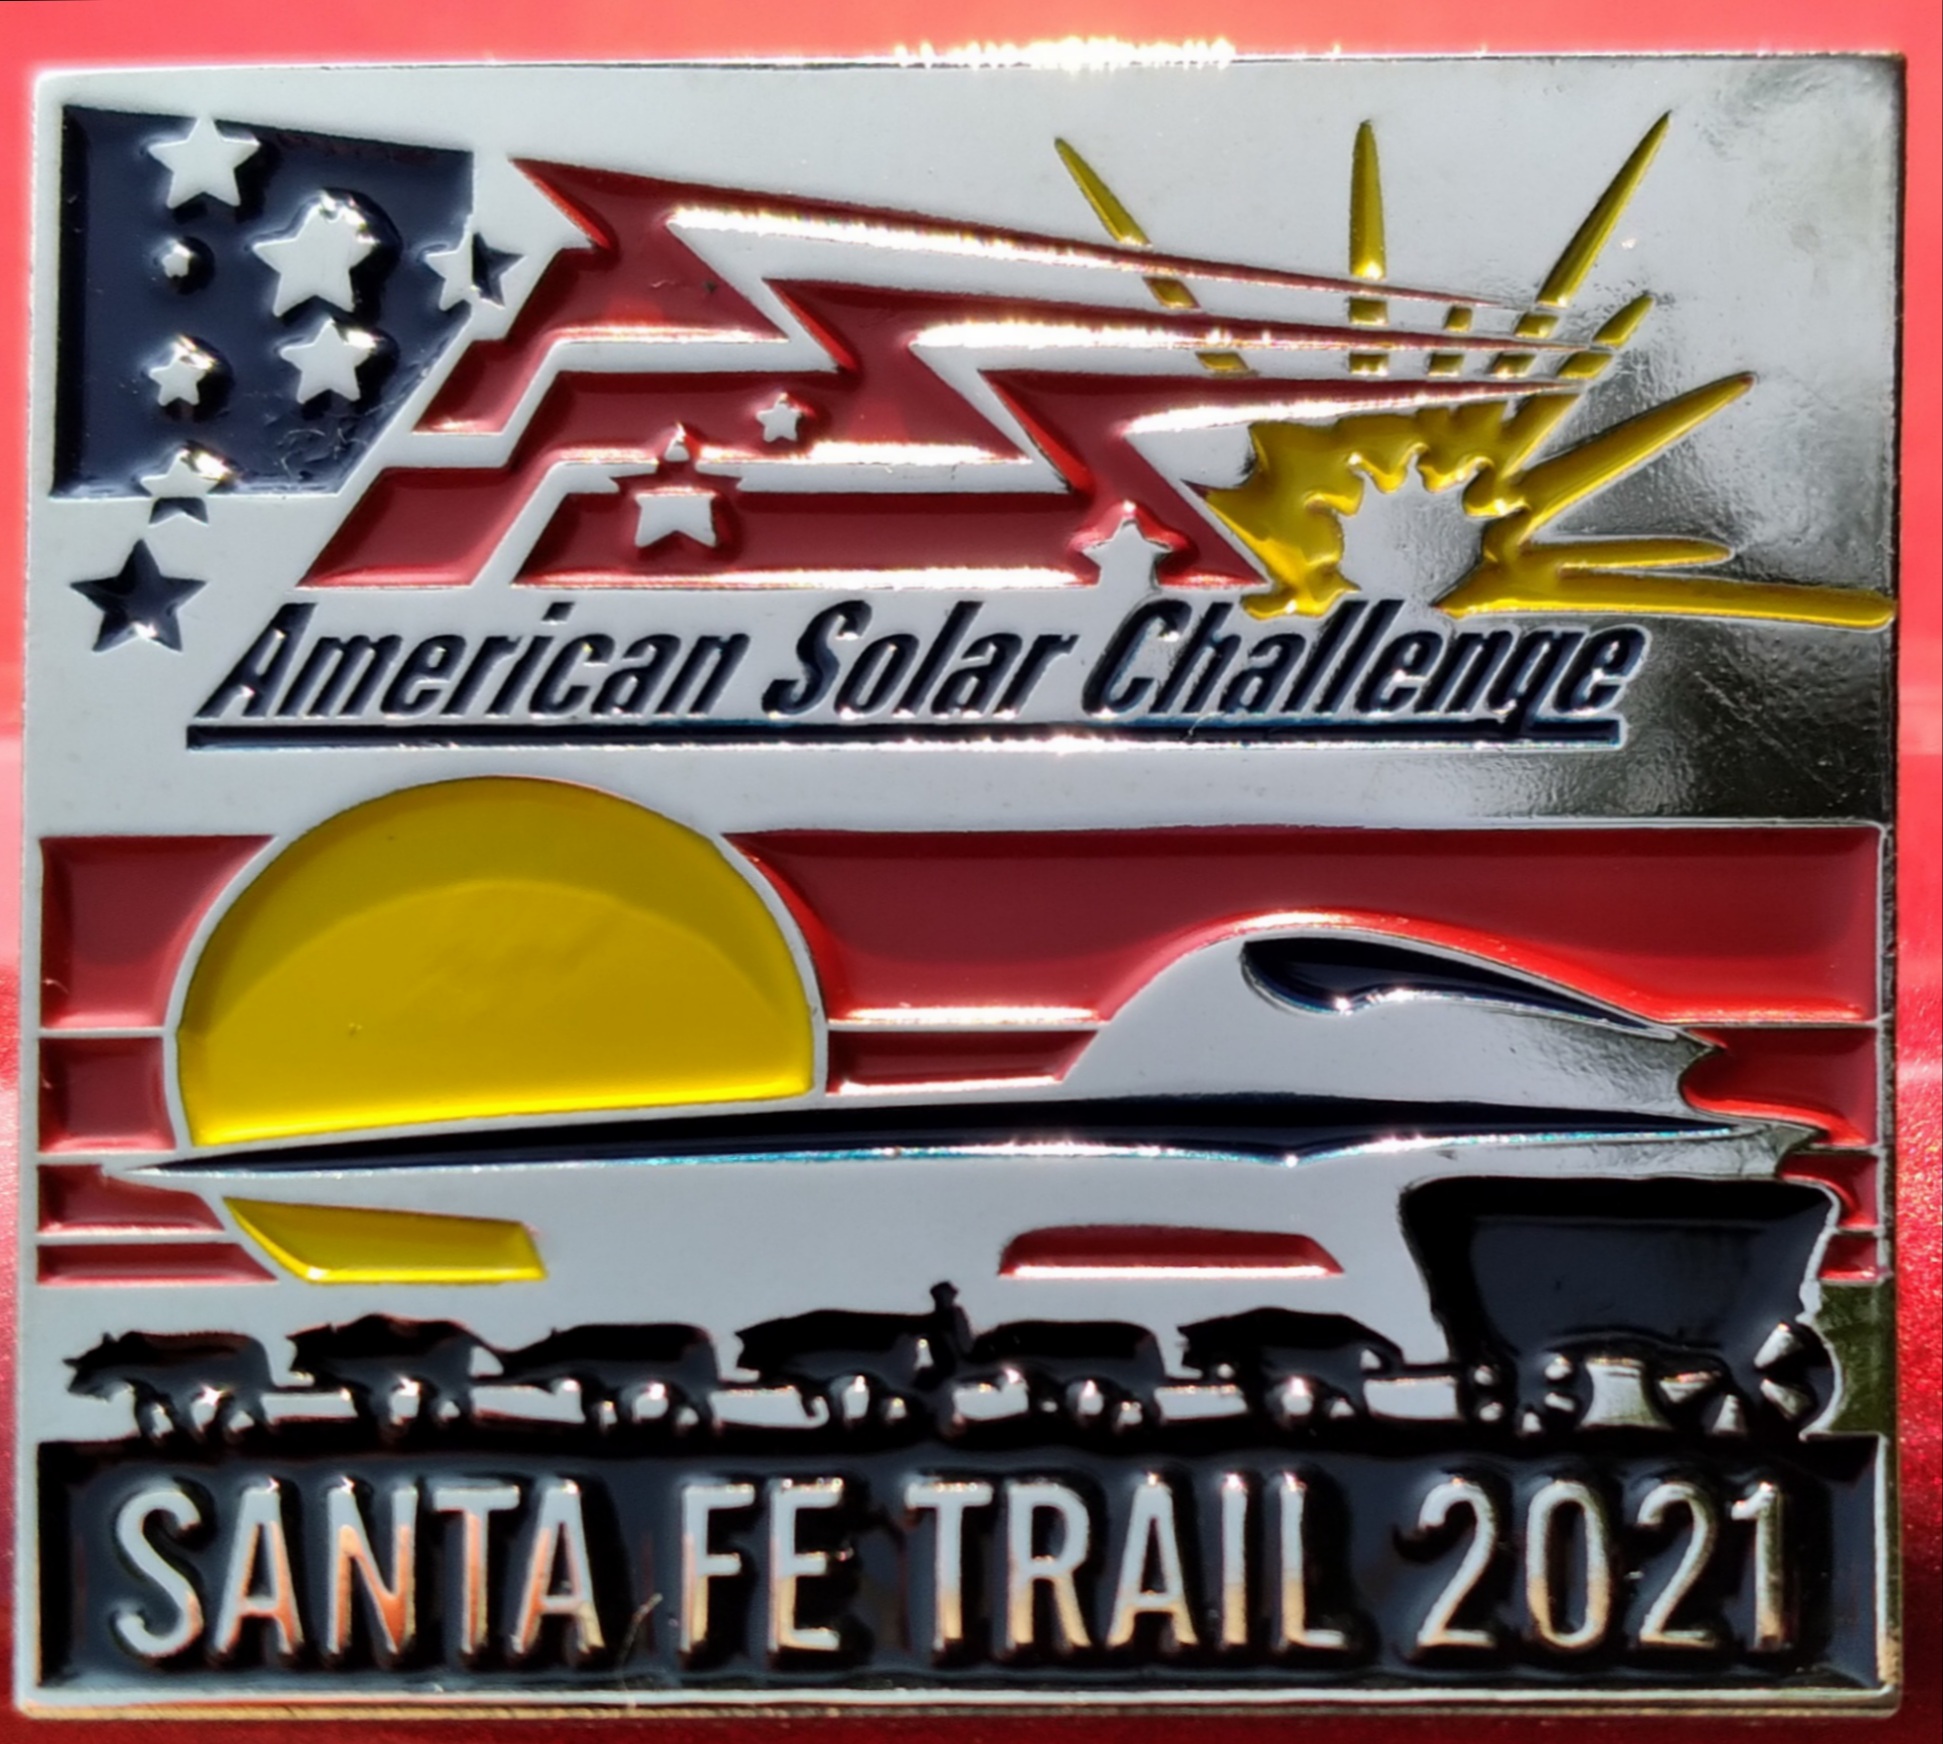 American Solar Challenge SECO News seconews.org